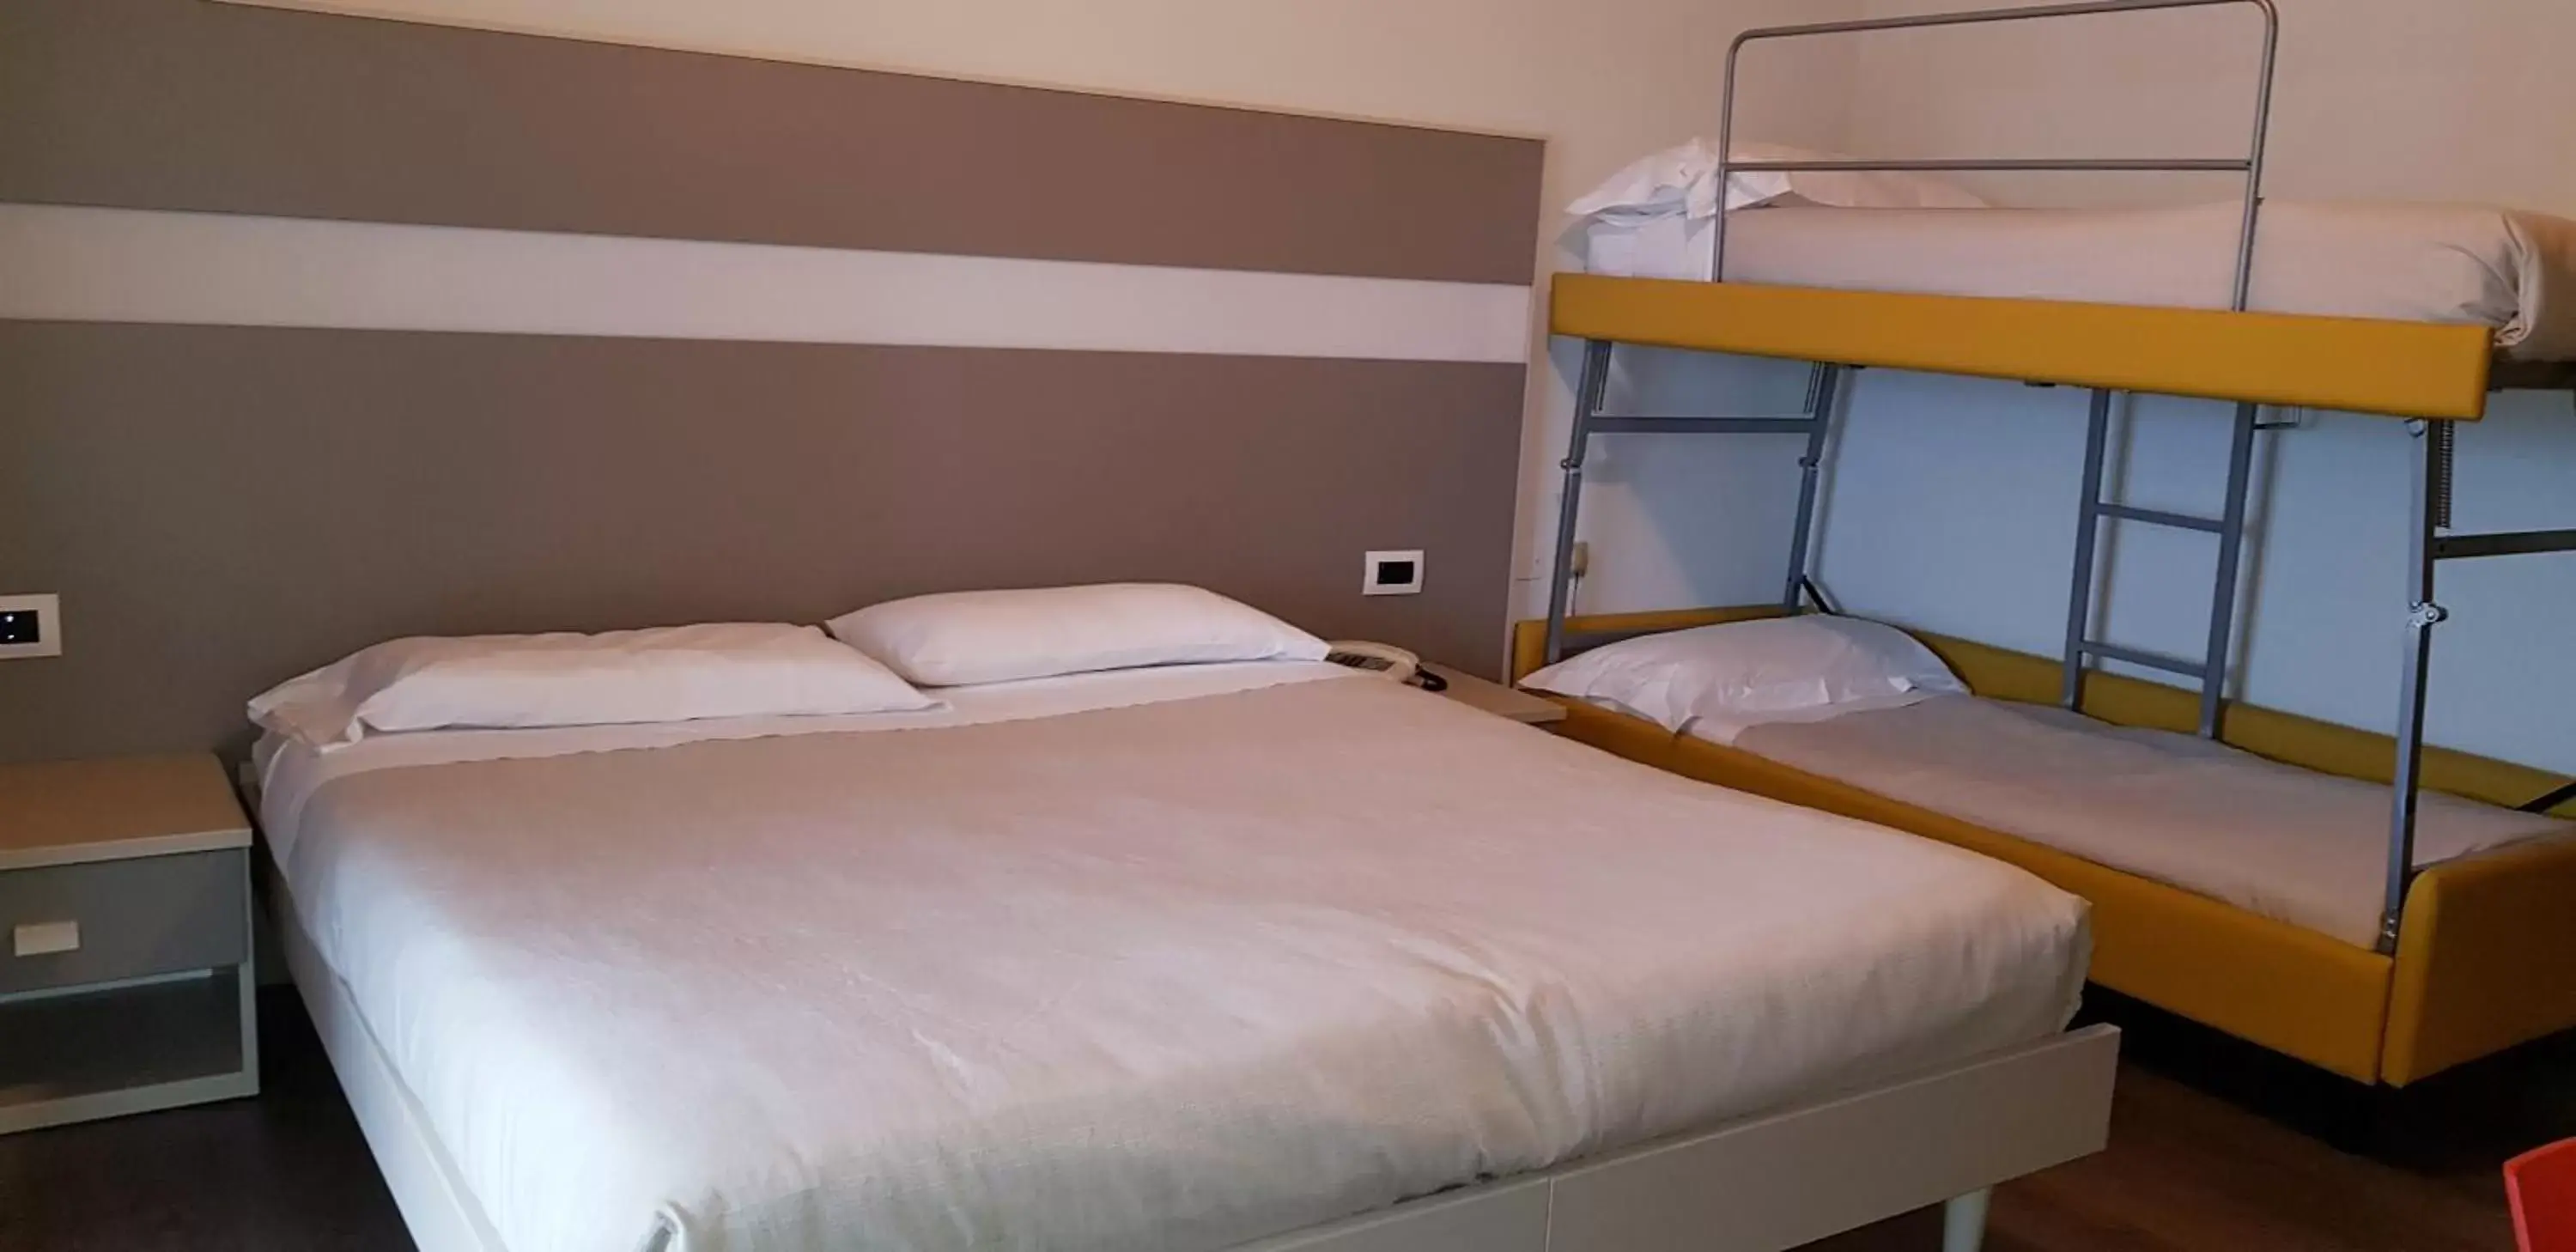 Bed in Hotel Ristorante Stampa